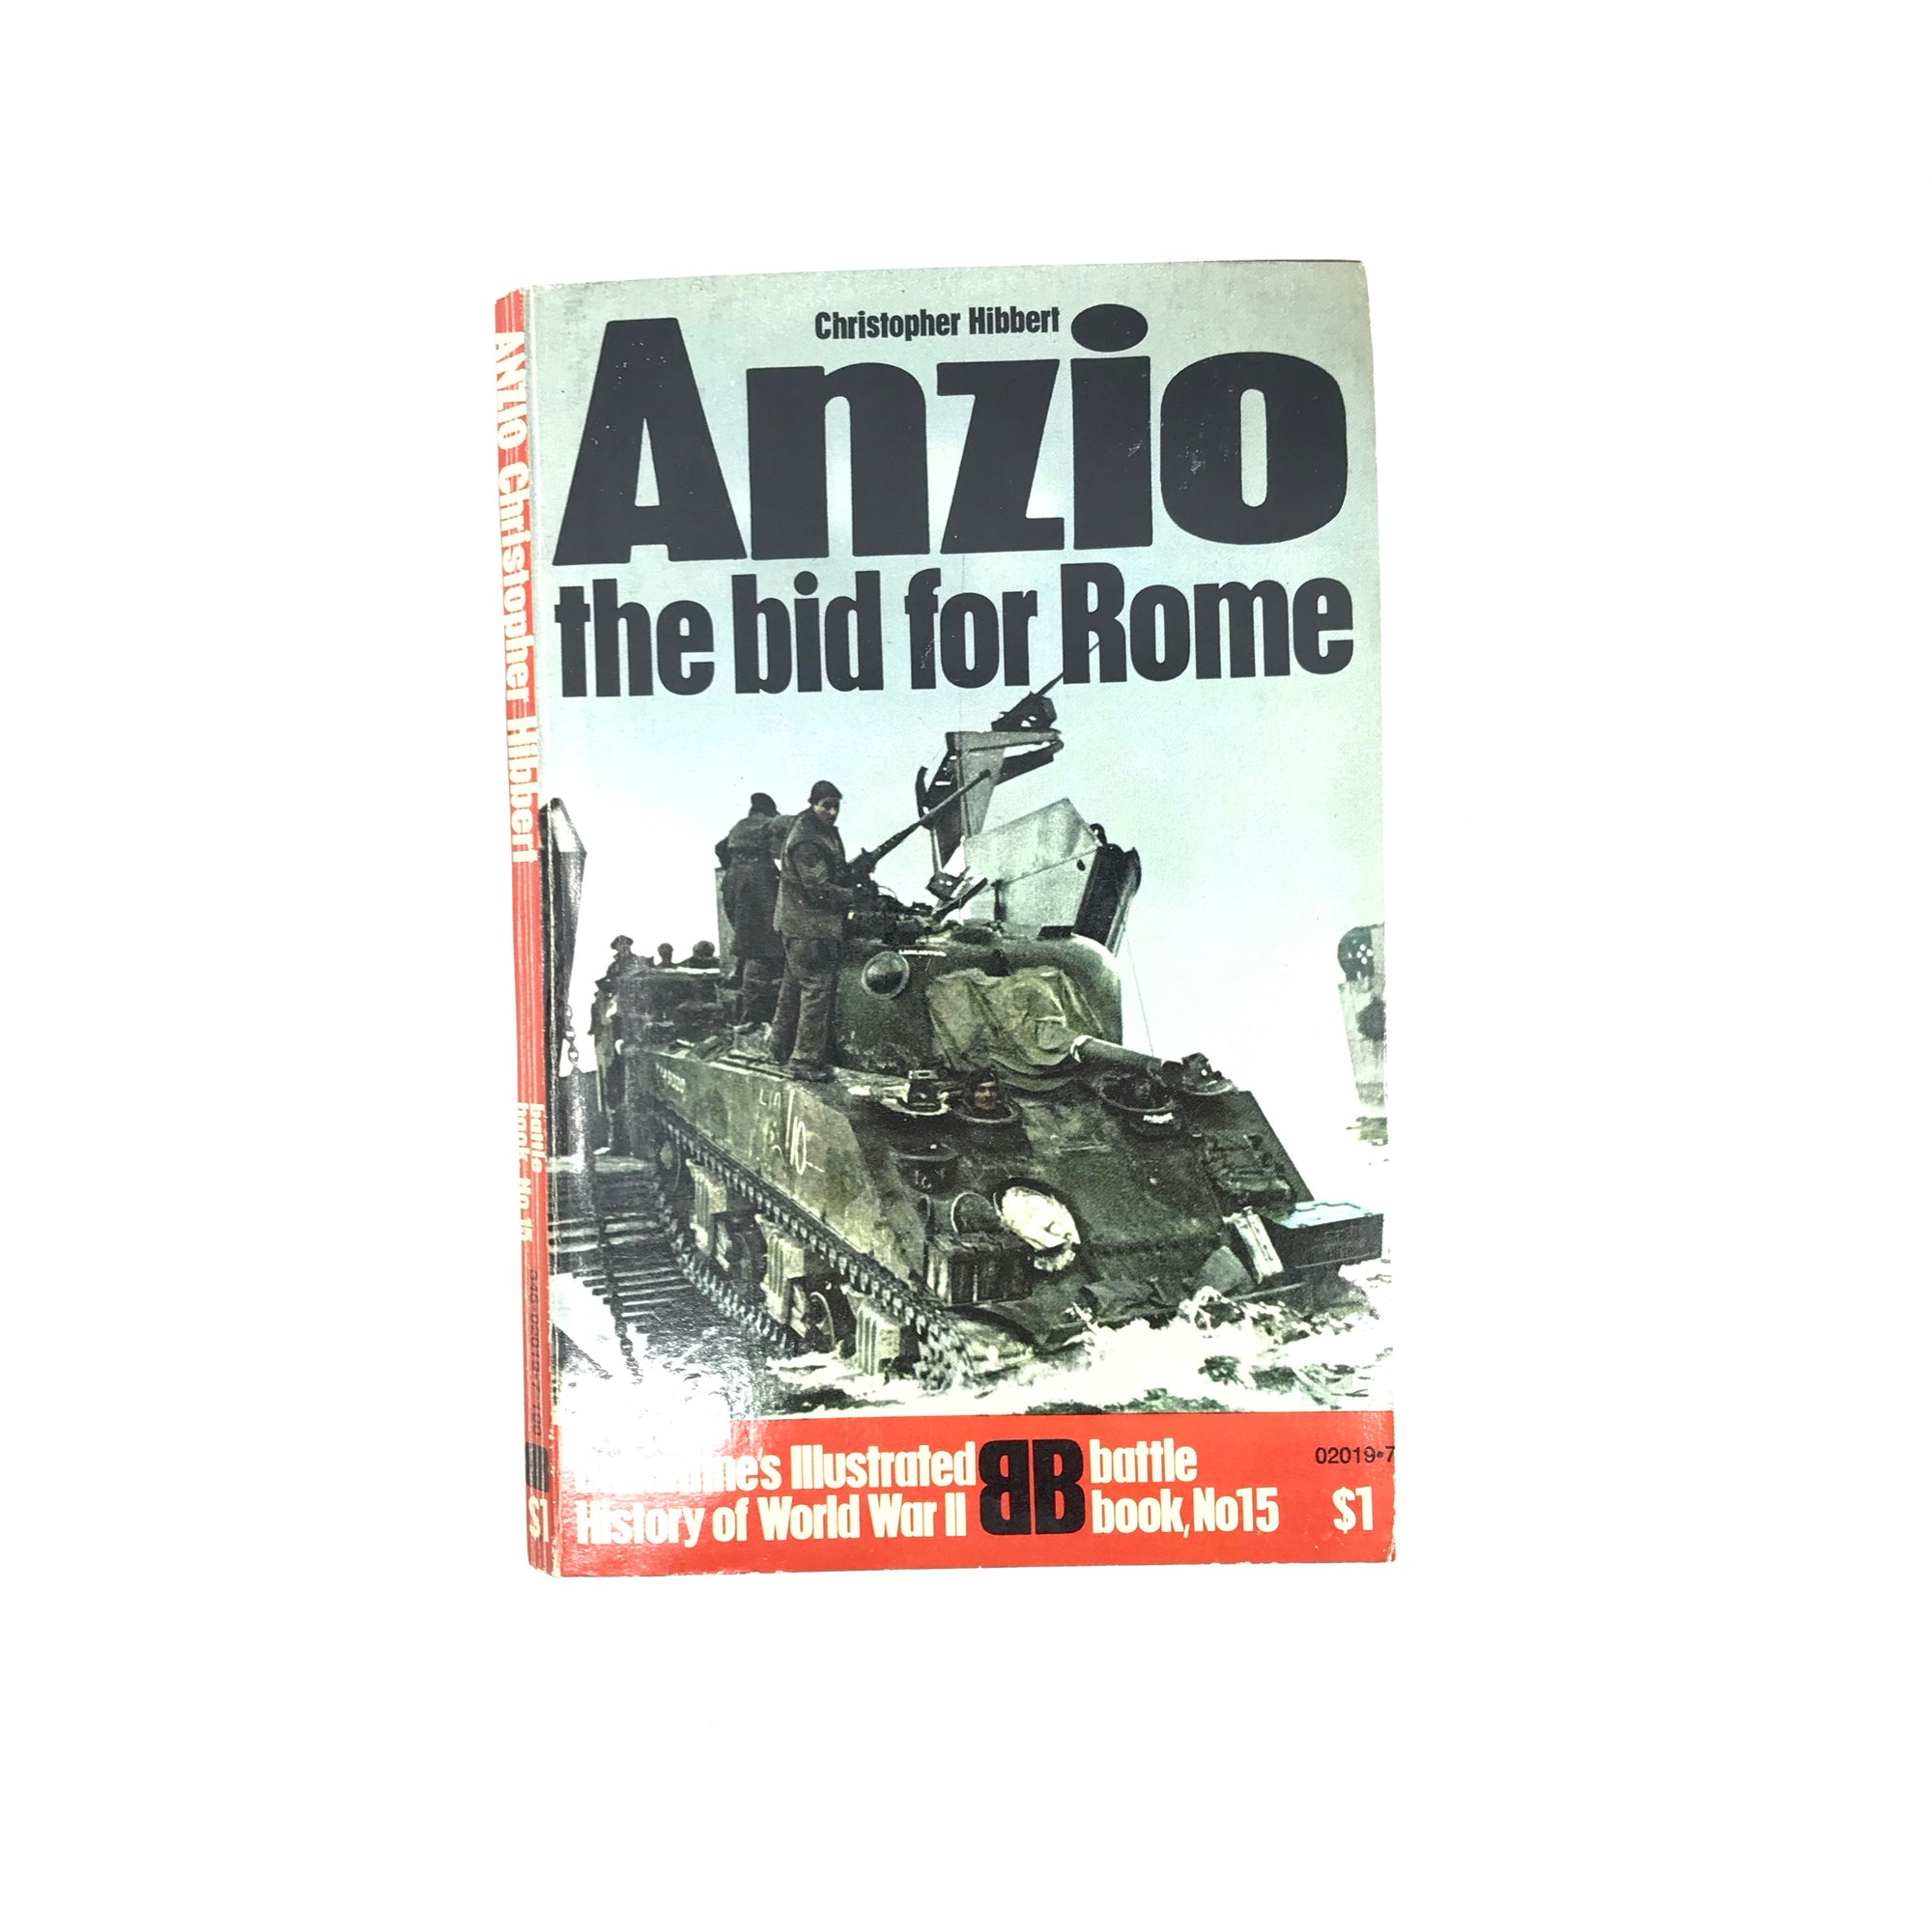 Ballantine's Illustrated History of World War II: Battle Book No15 - Anzio The Bid for Rome (Christopher Hibbert)